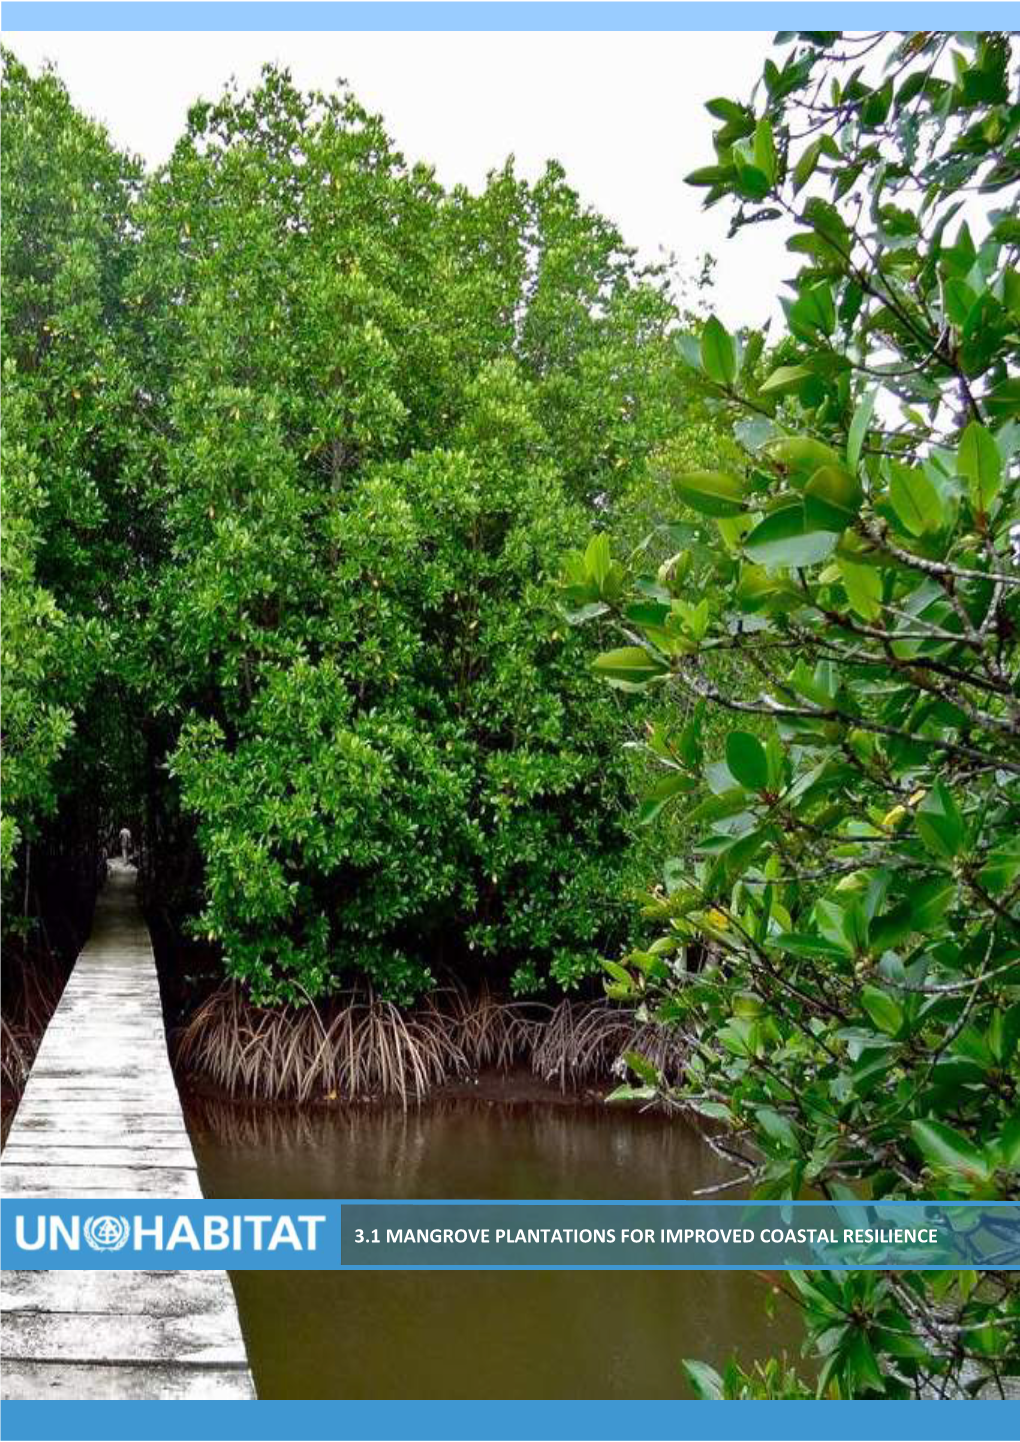 Un-Habitat 3.1 Mangrove Plantations for Improved